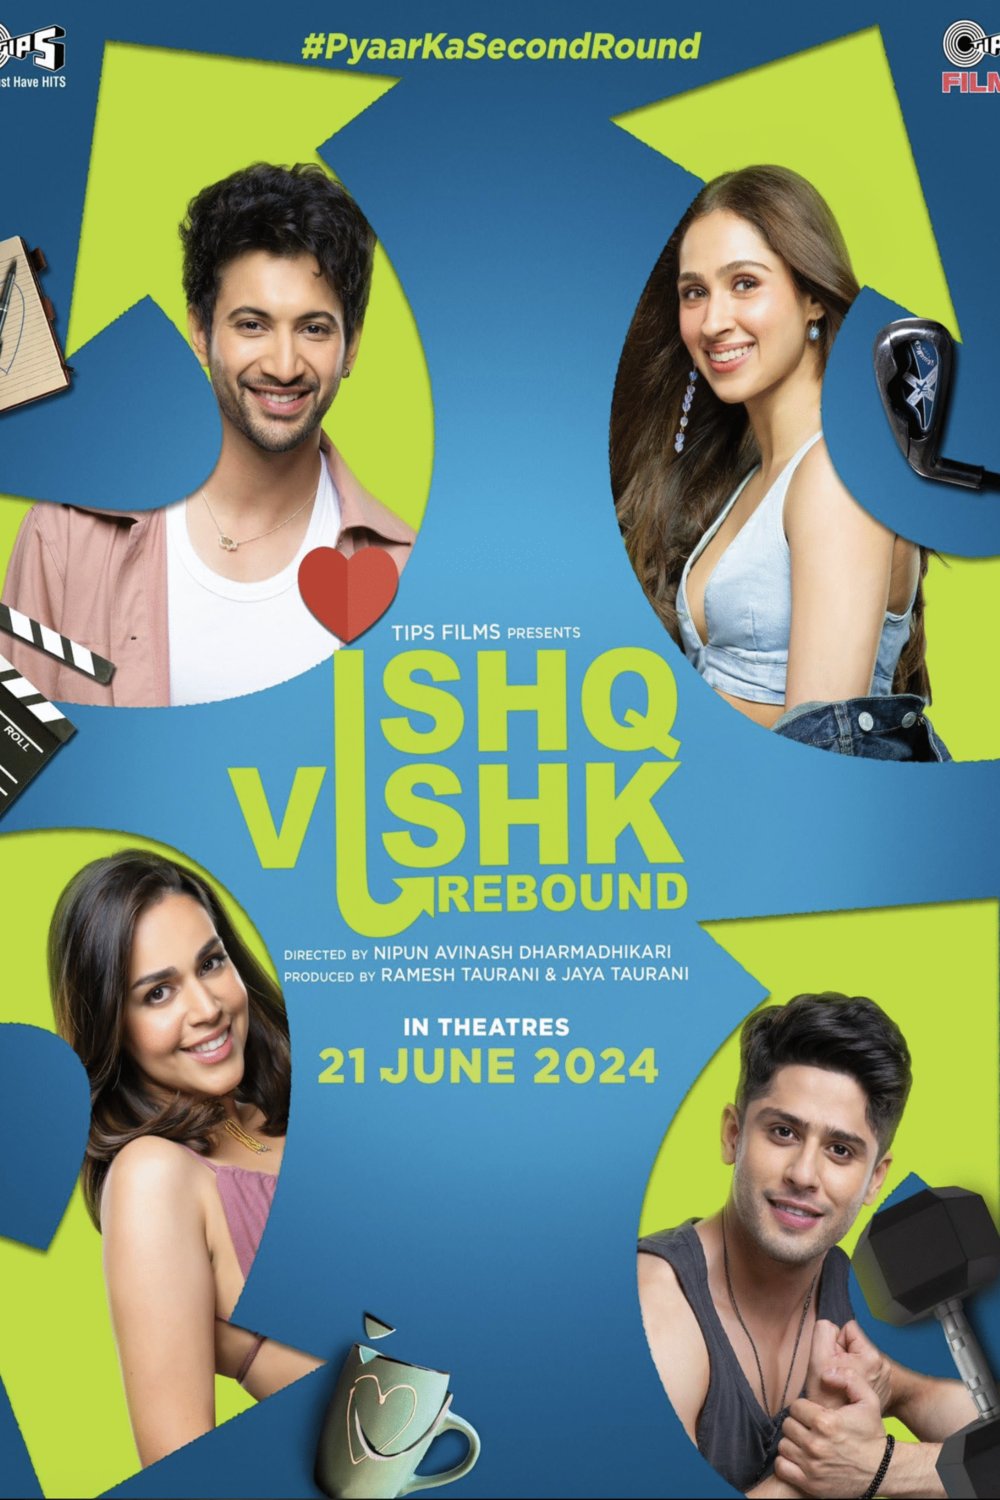 Hindi poster of the movie Ishq Vishk Rebound